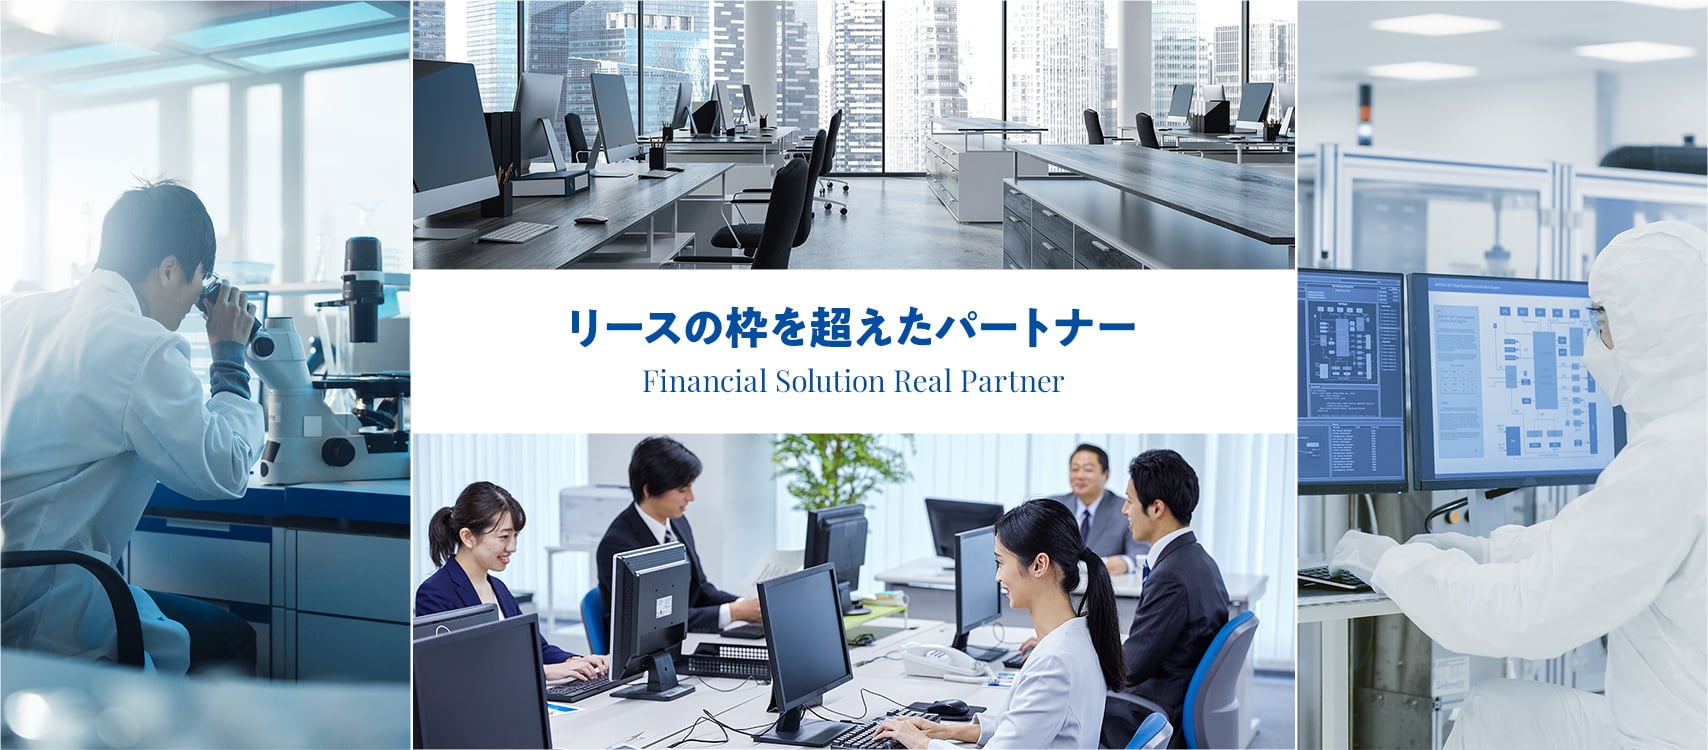 Financial Solution Real Partner リースの枠を超えたパートナー